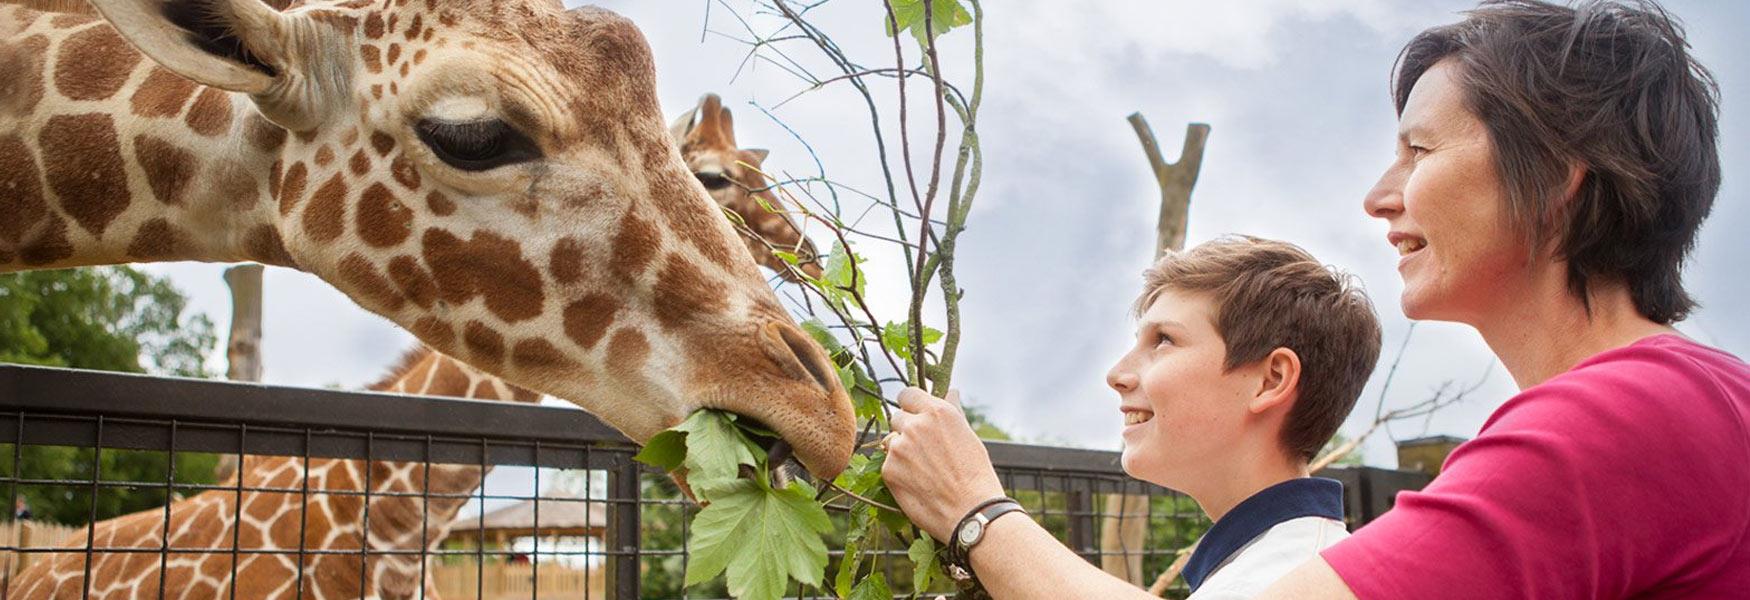 Meet the Giraffes Experience at ZSL Whipsnade Zoo